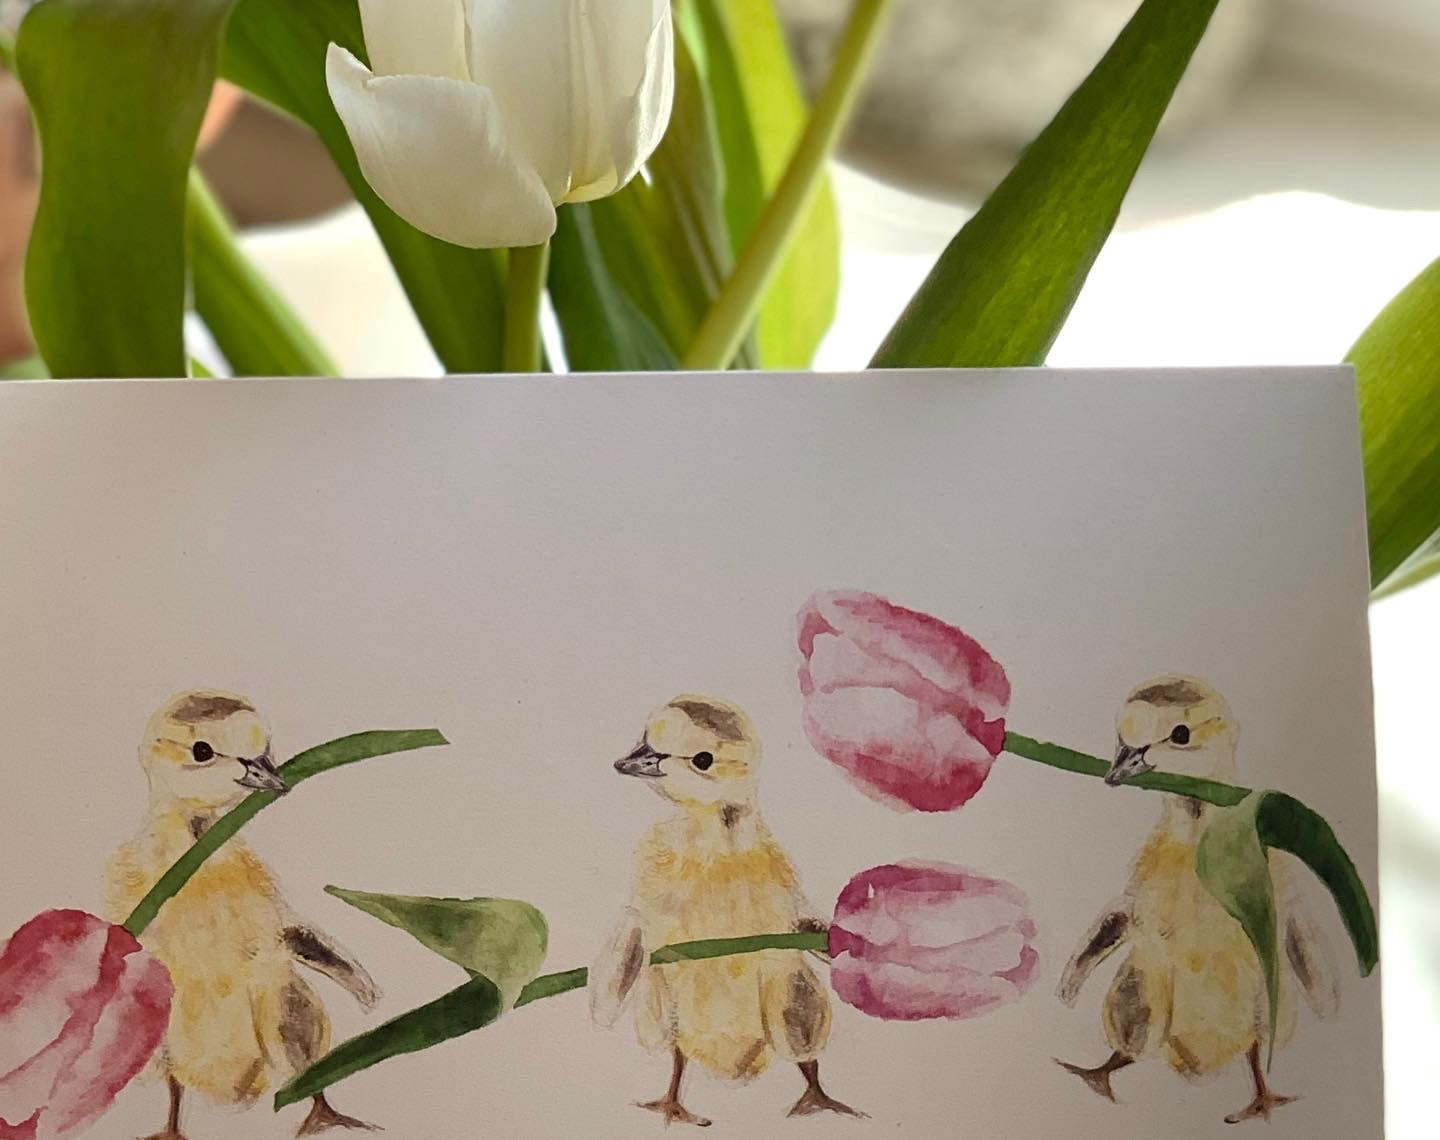 Ducklings & Tulips greeting card